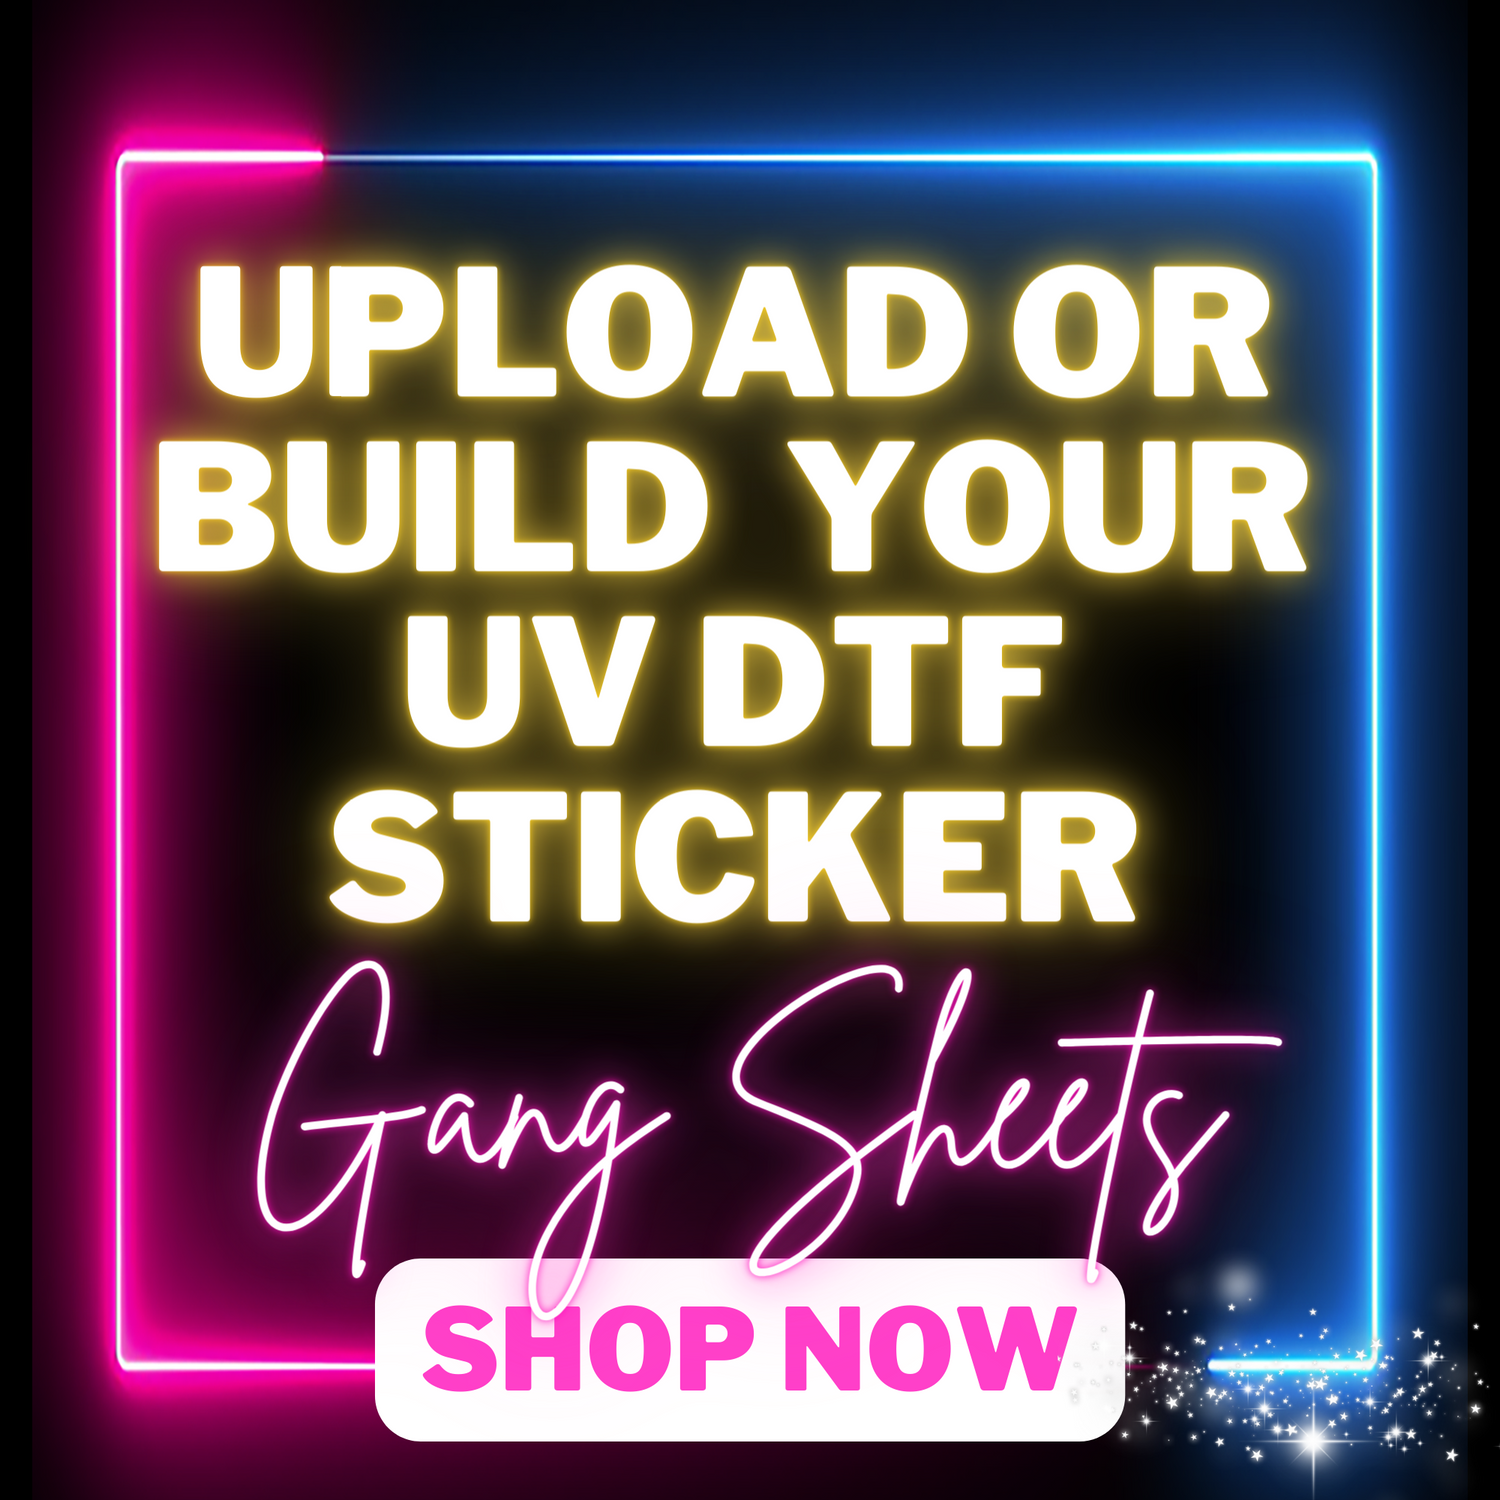 UV DTF Sticker Gang Sheets